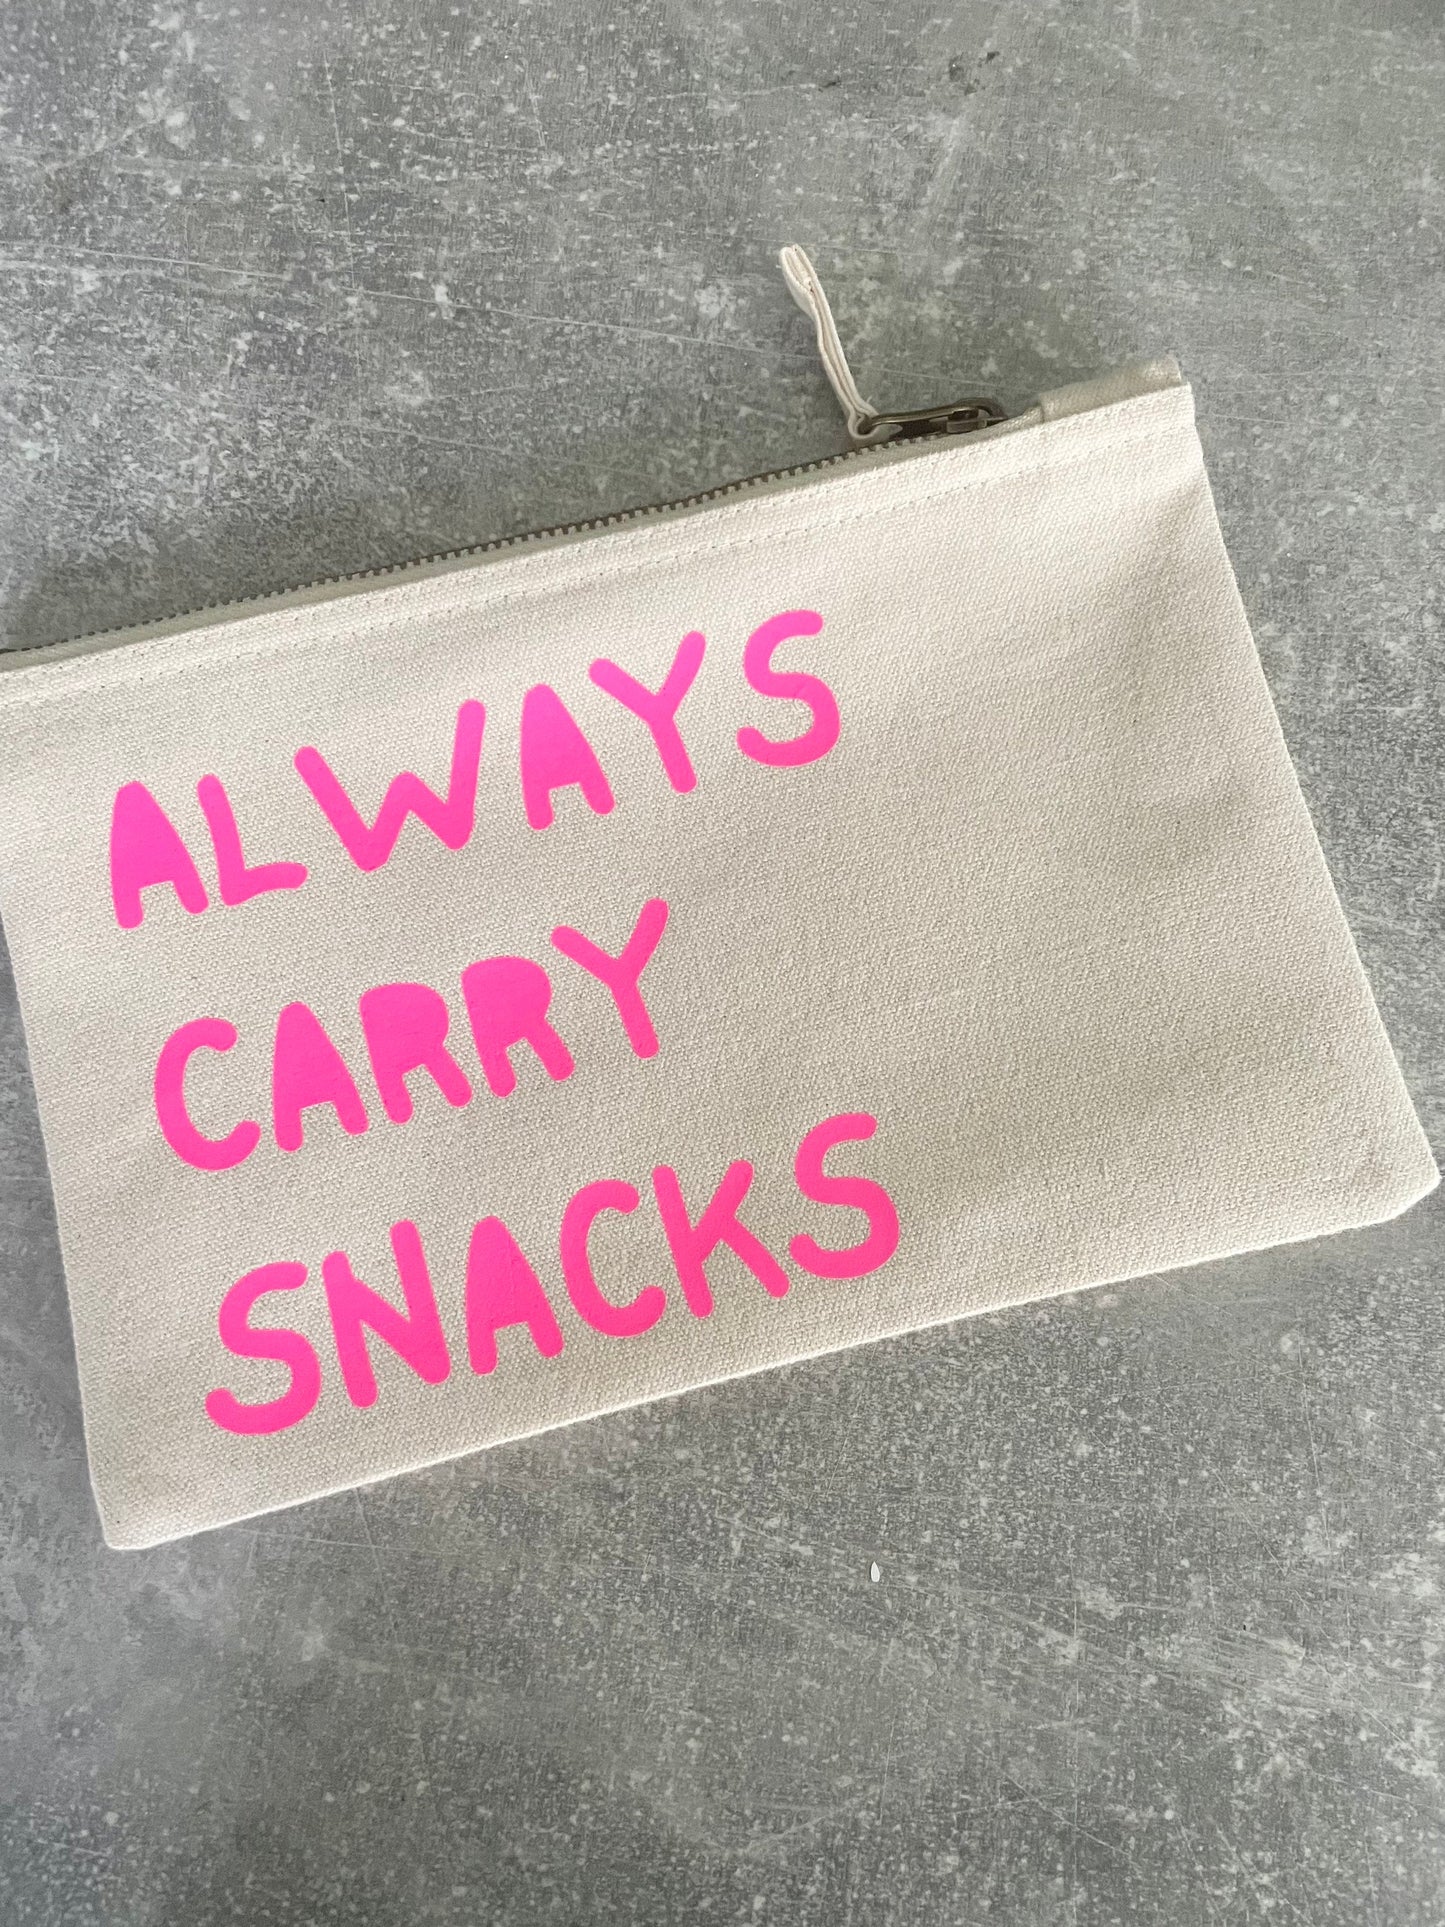 Always Carry Snacks Pouch